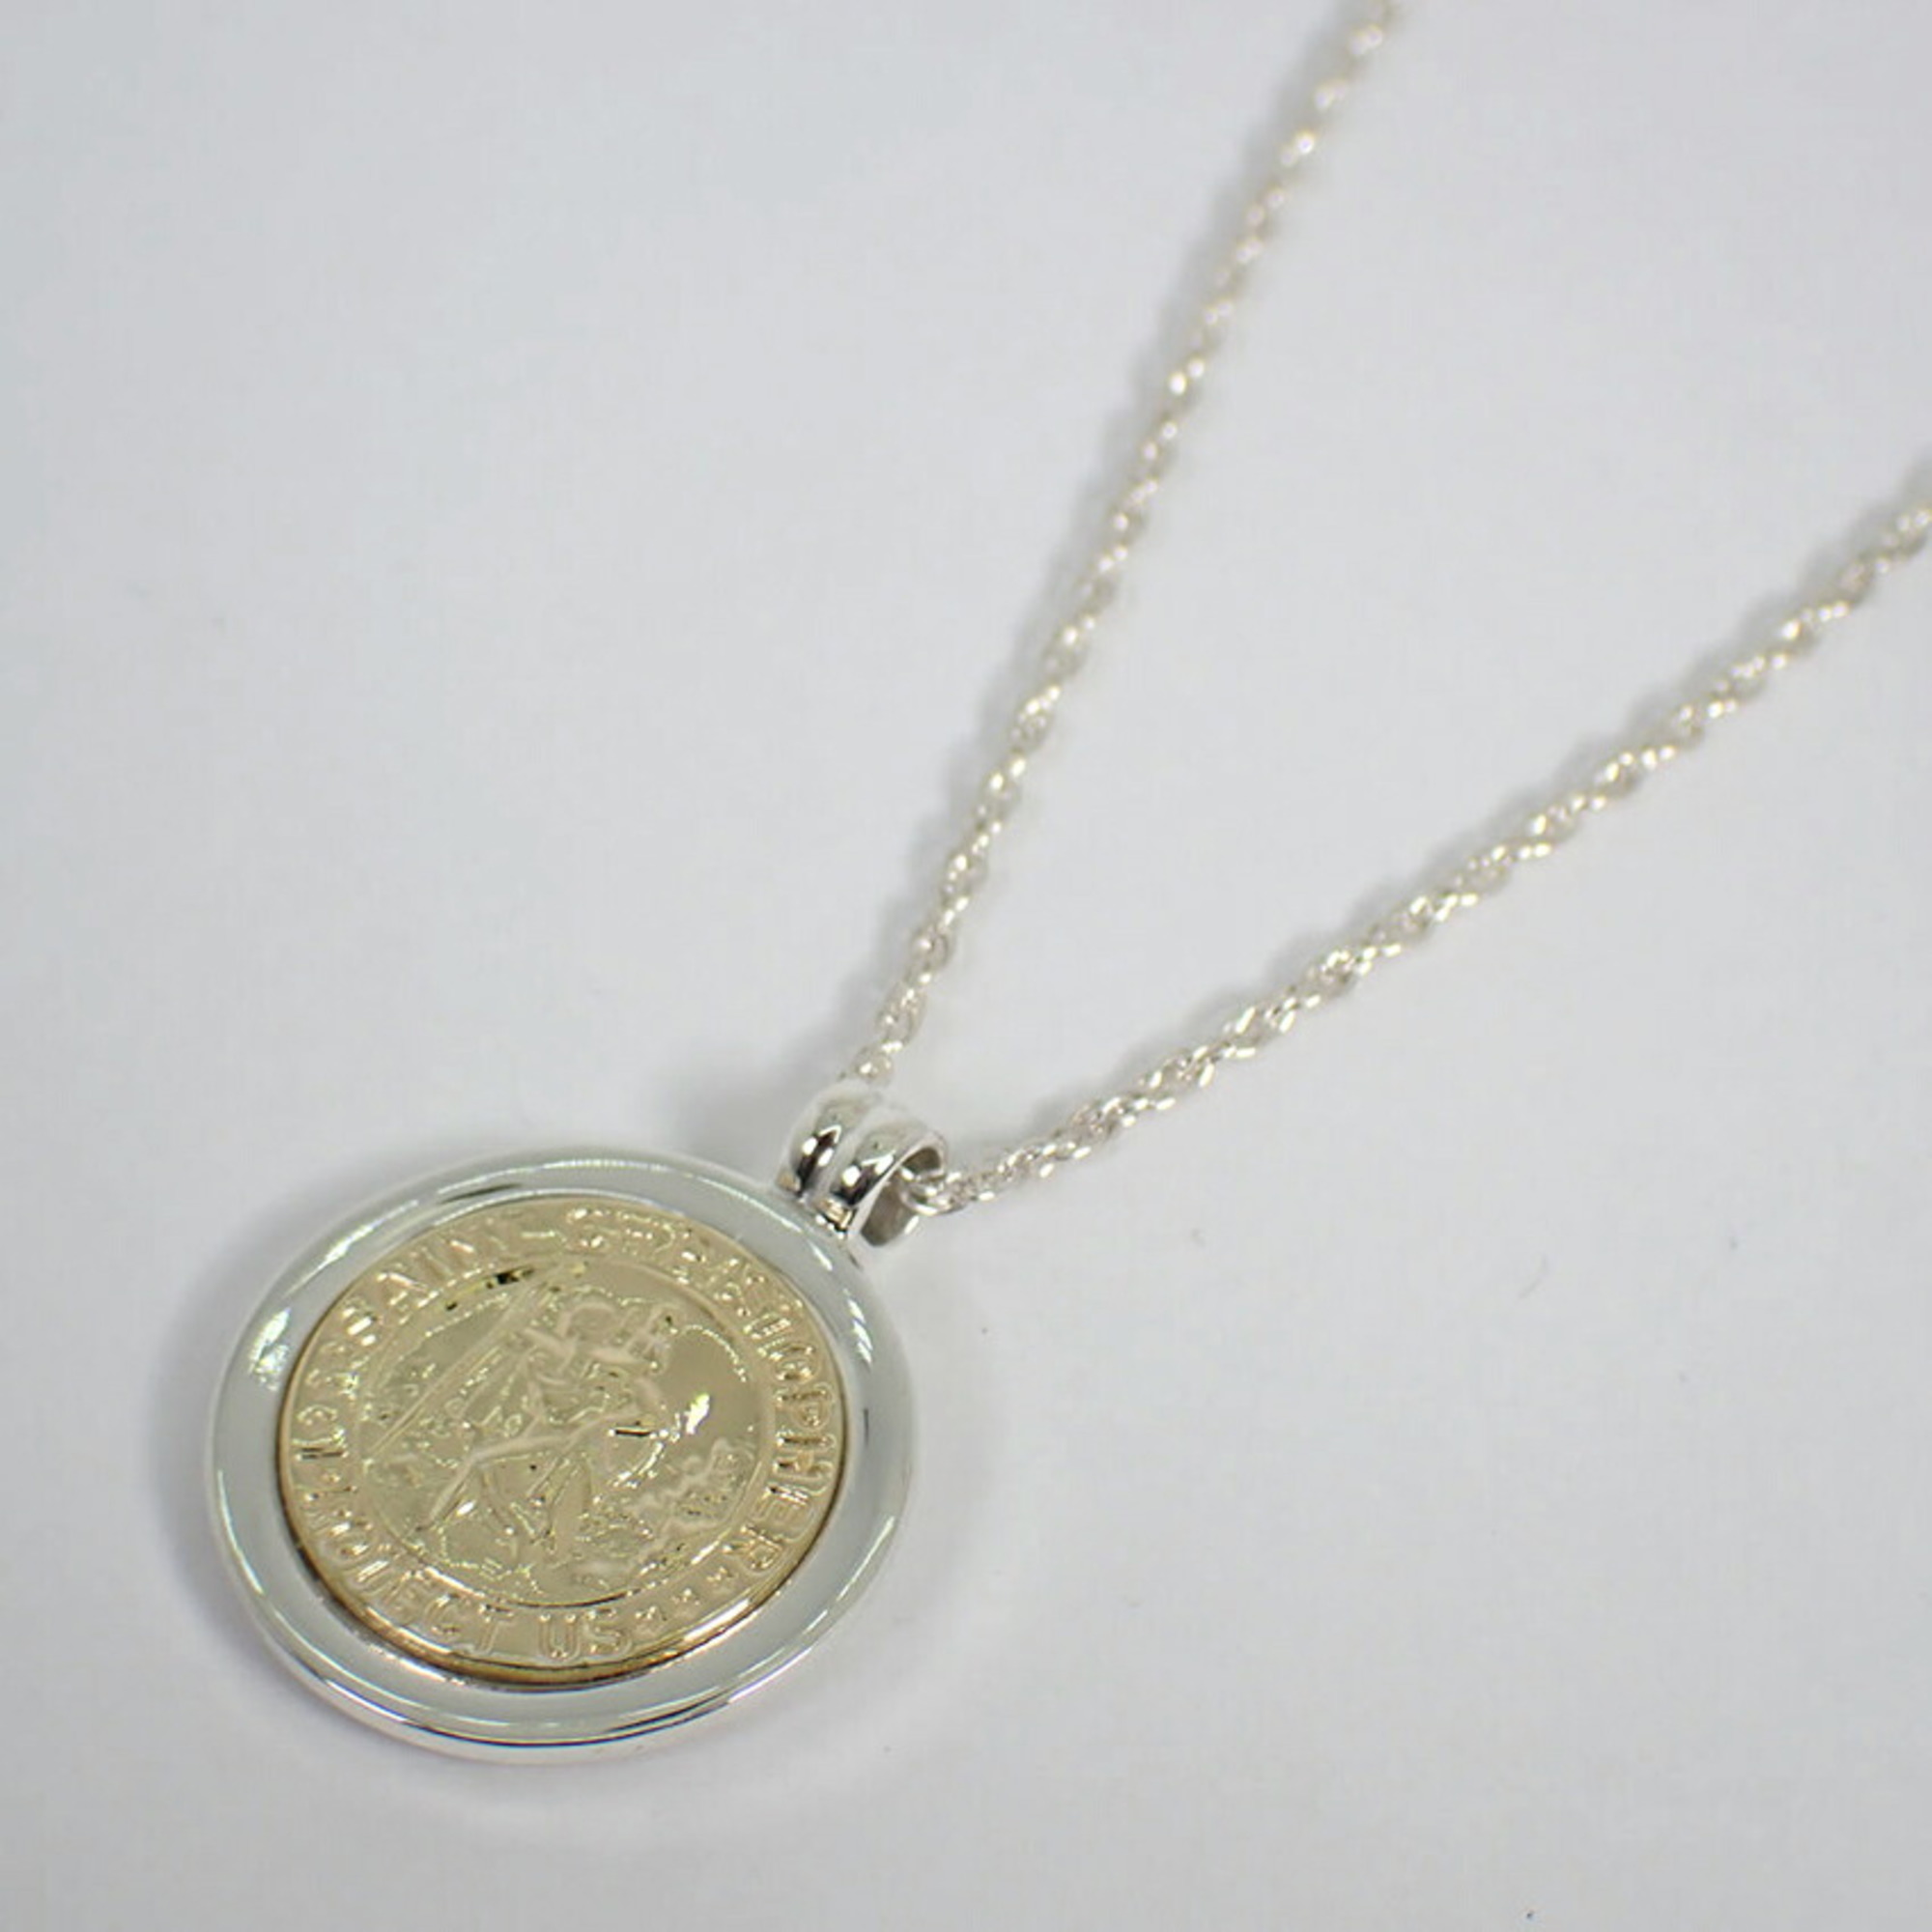 TIFFANY/Tiffany 925/750 combination St. Christopher coin pendant